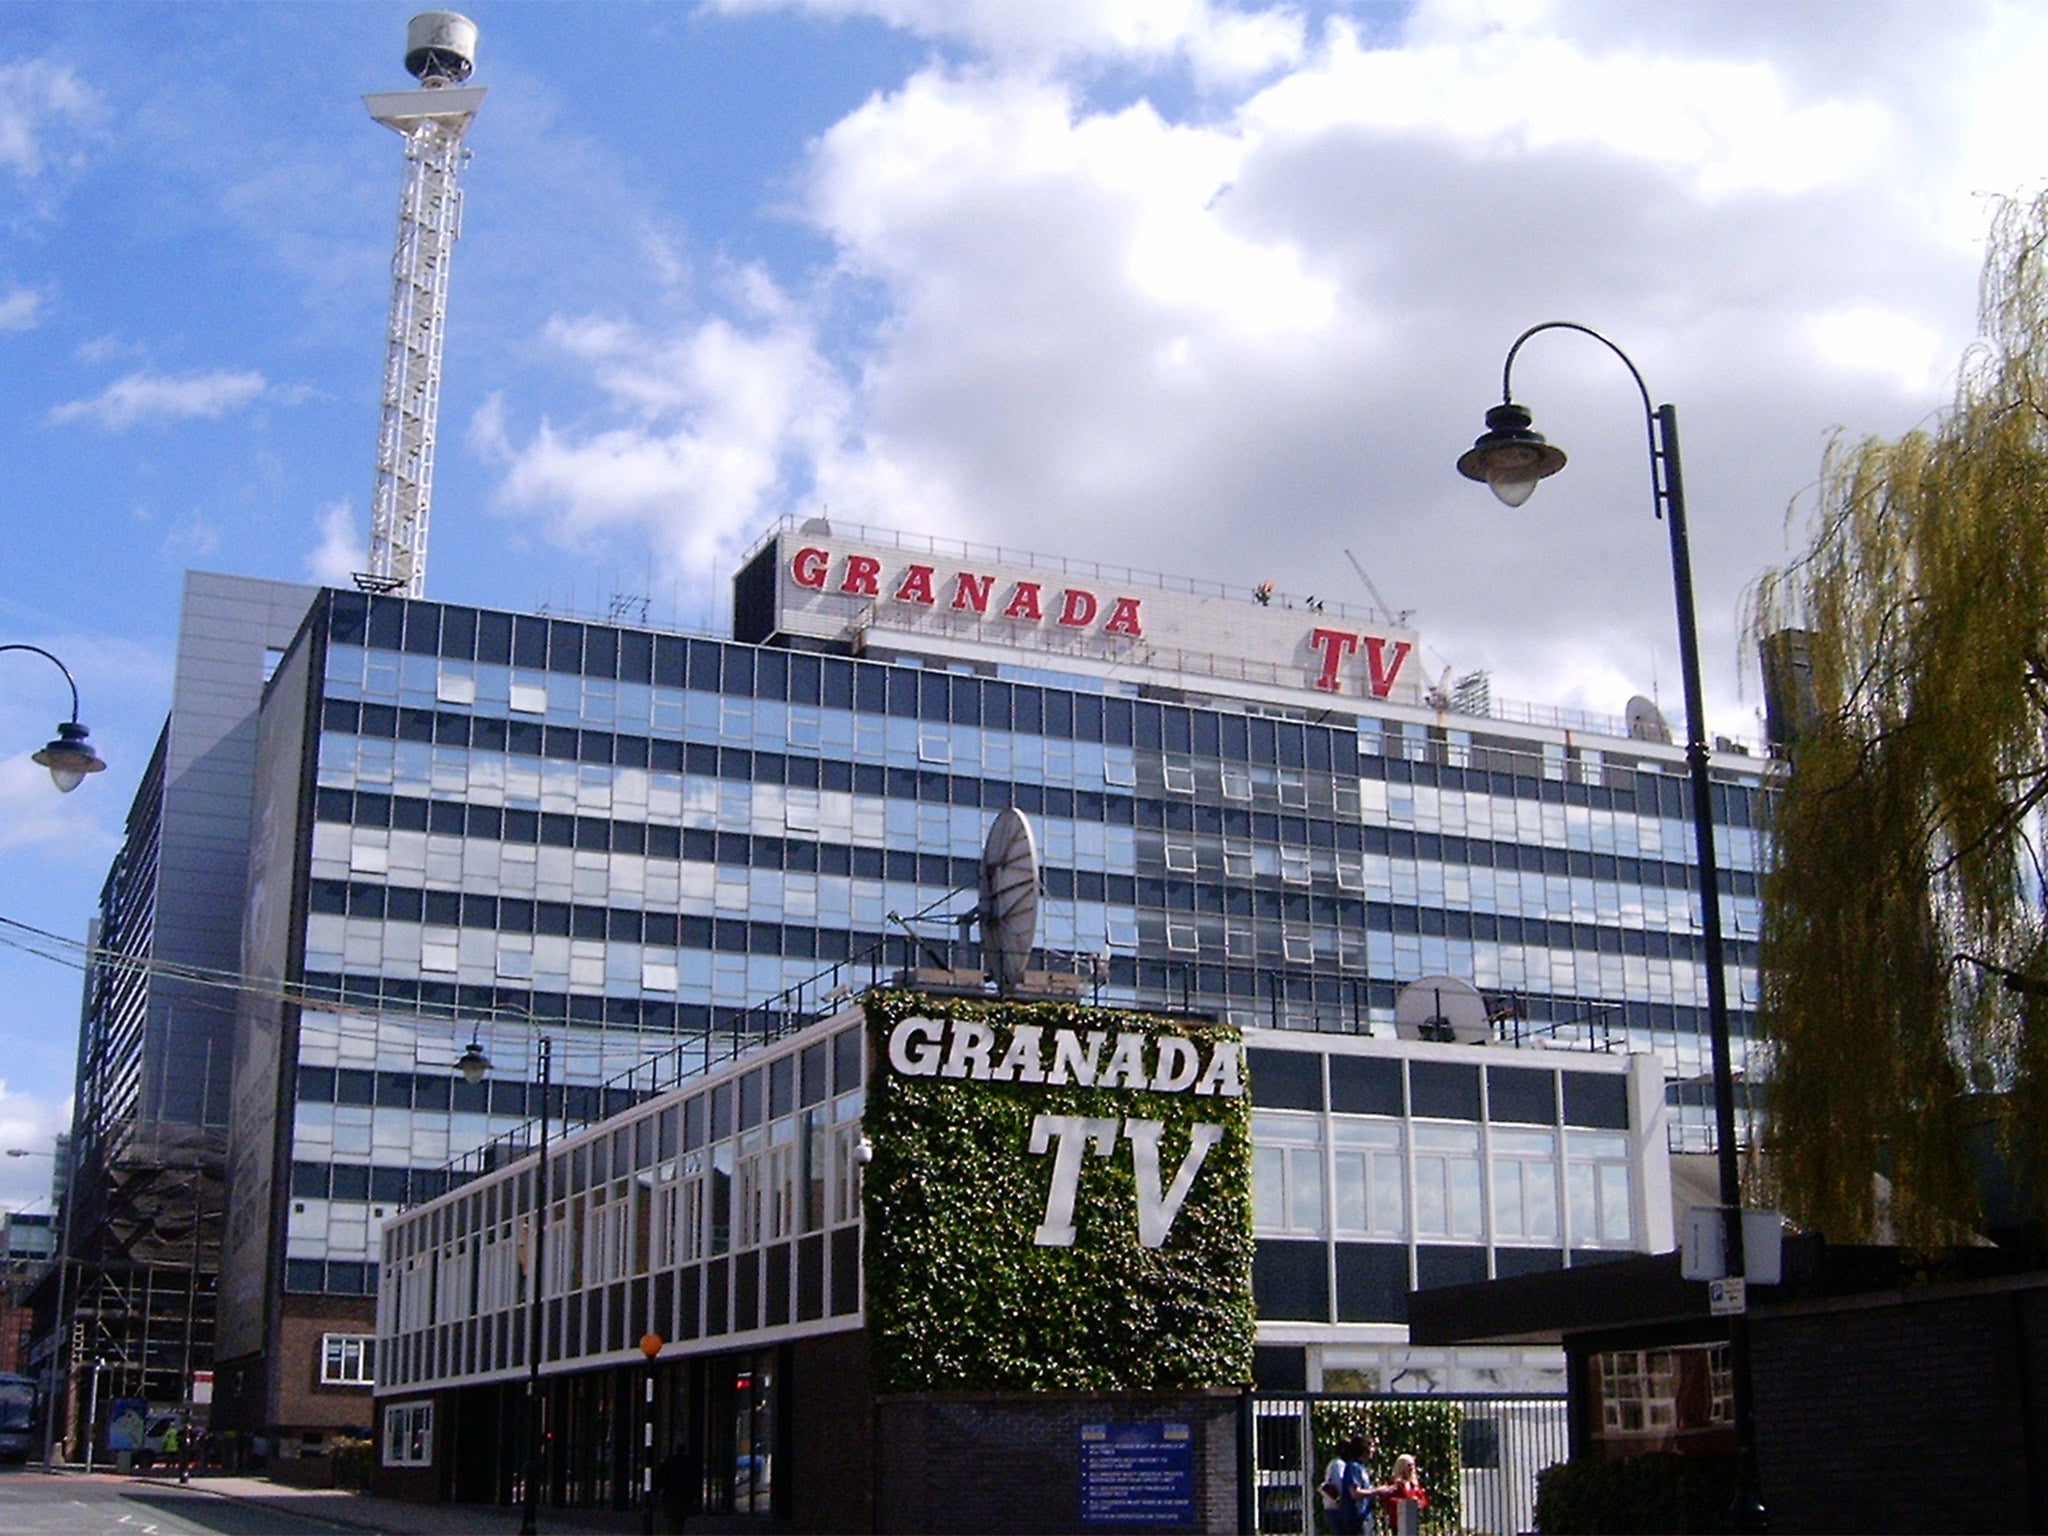 The former Granada Studios site on Quay Street, Manchester